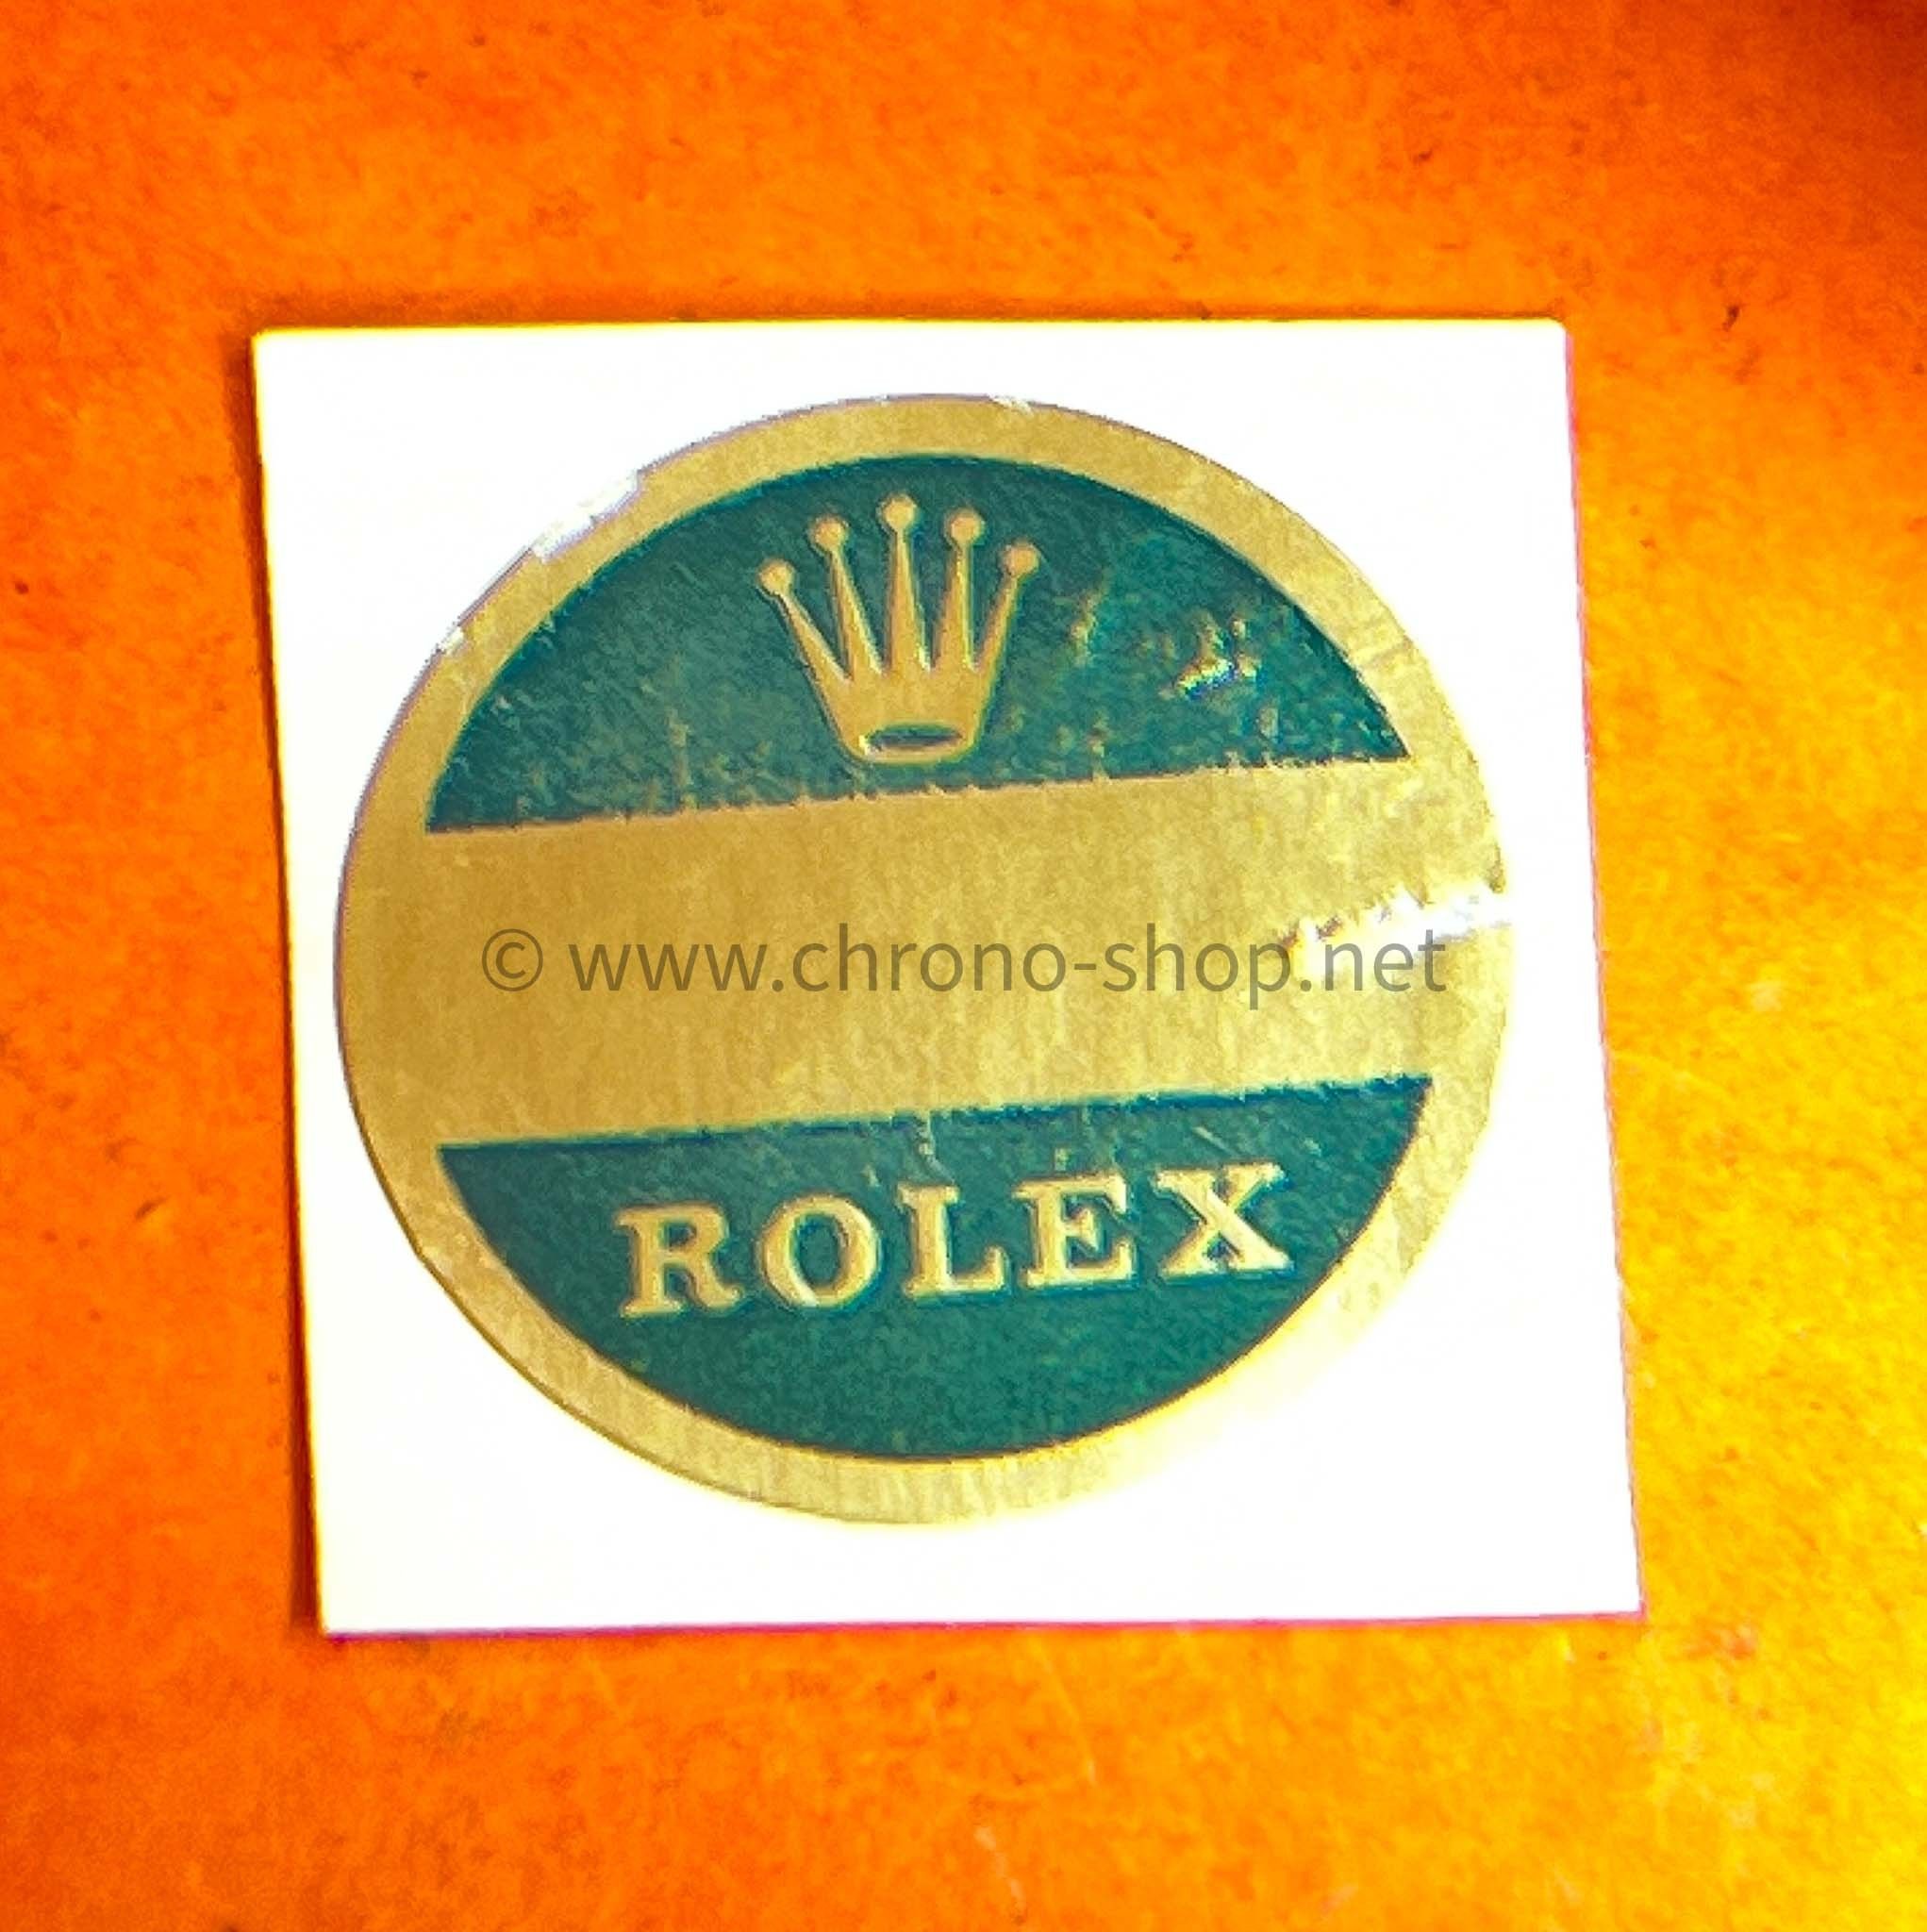 Rolex Rare Sticker Adhésif vert 21mm Montres Submariner, GMT, Explorer, Daytona 6263, 5512, 5513, 1680, 1655, 6542, 1016, 6241